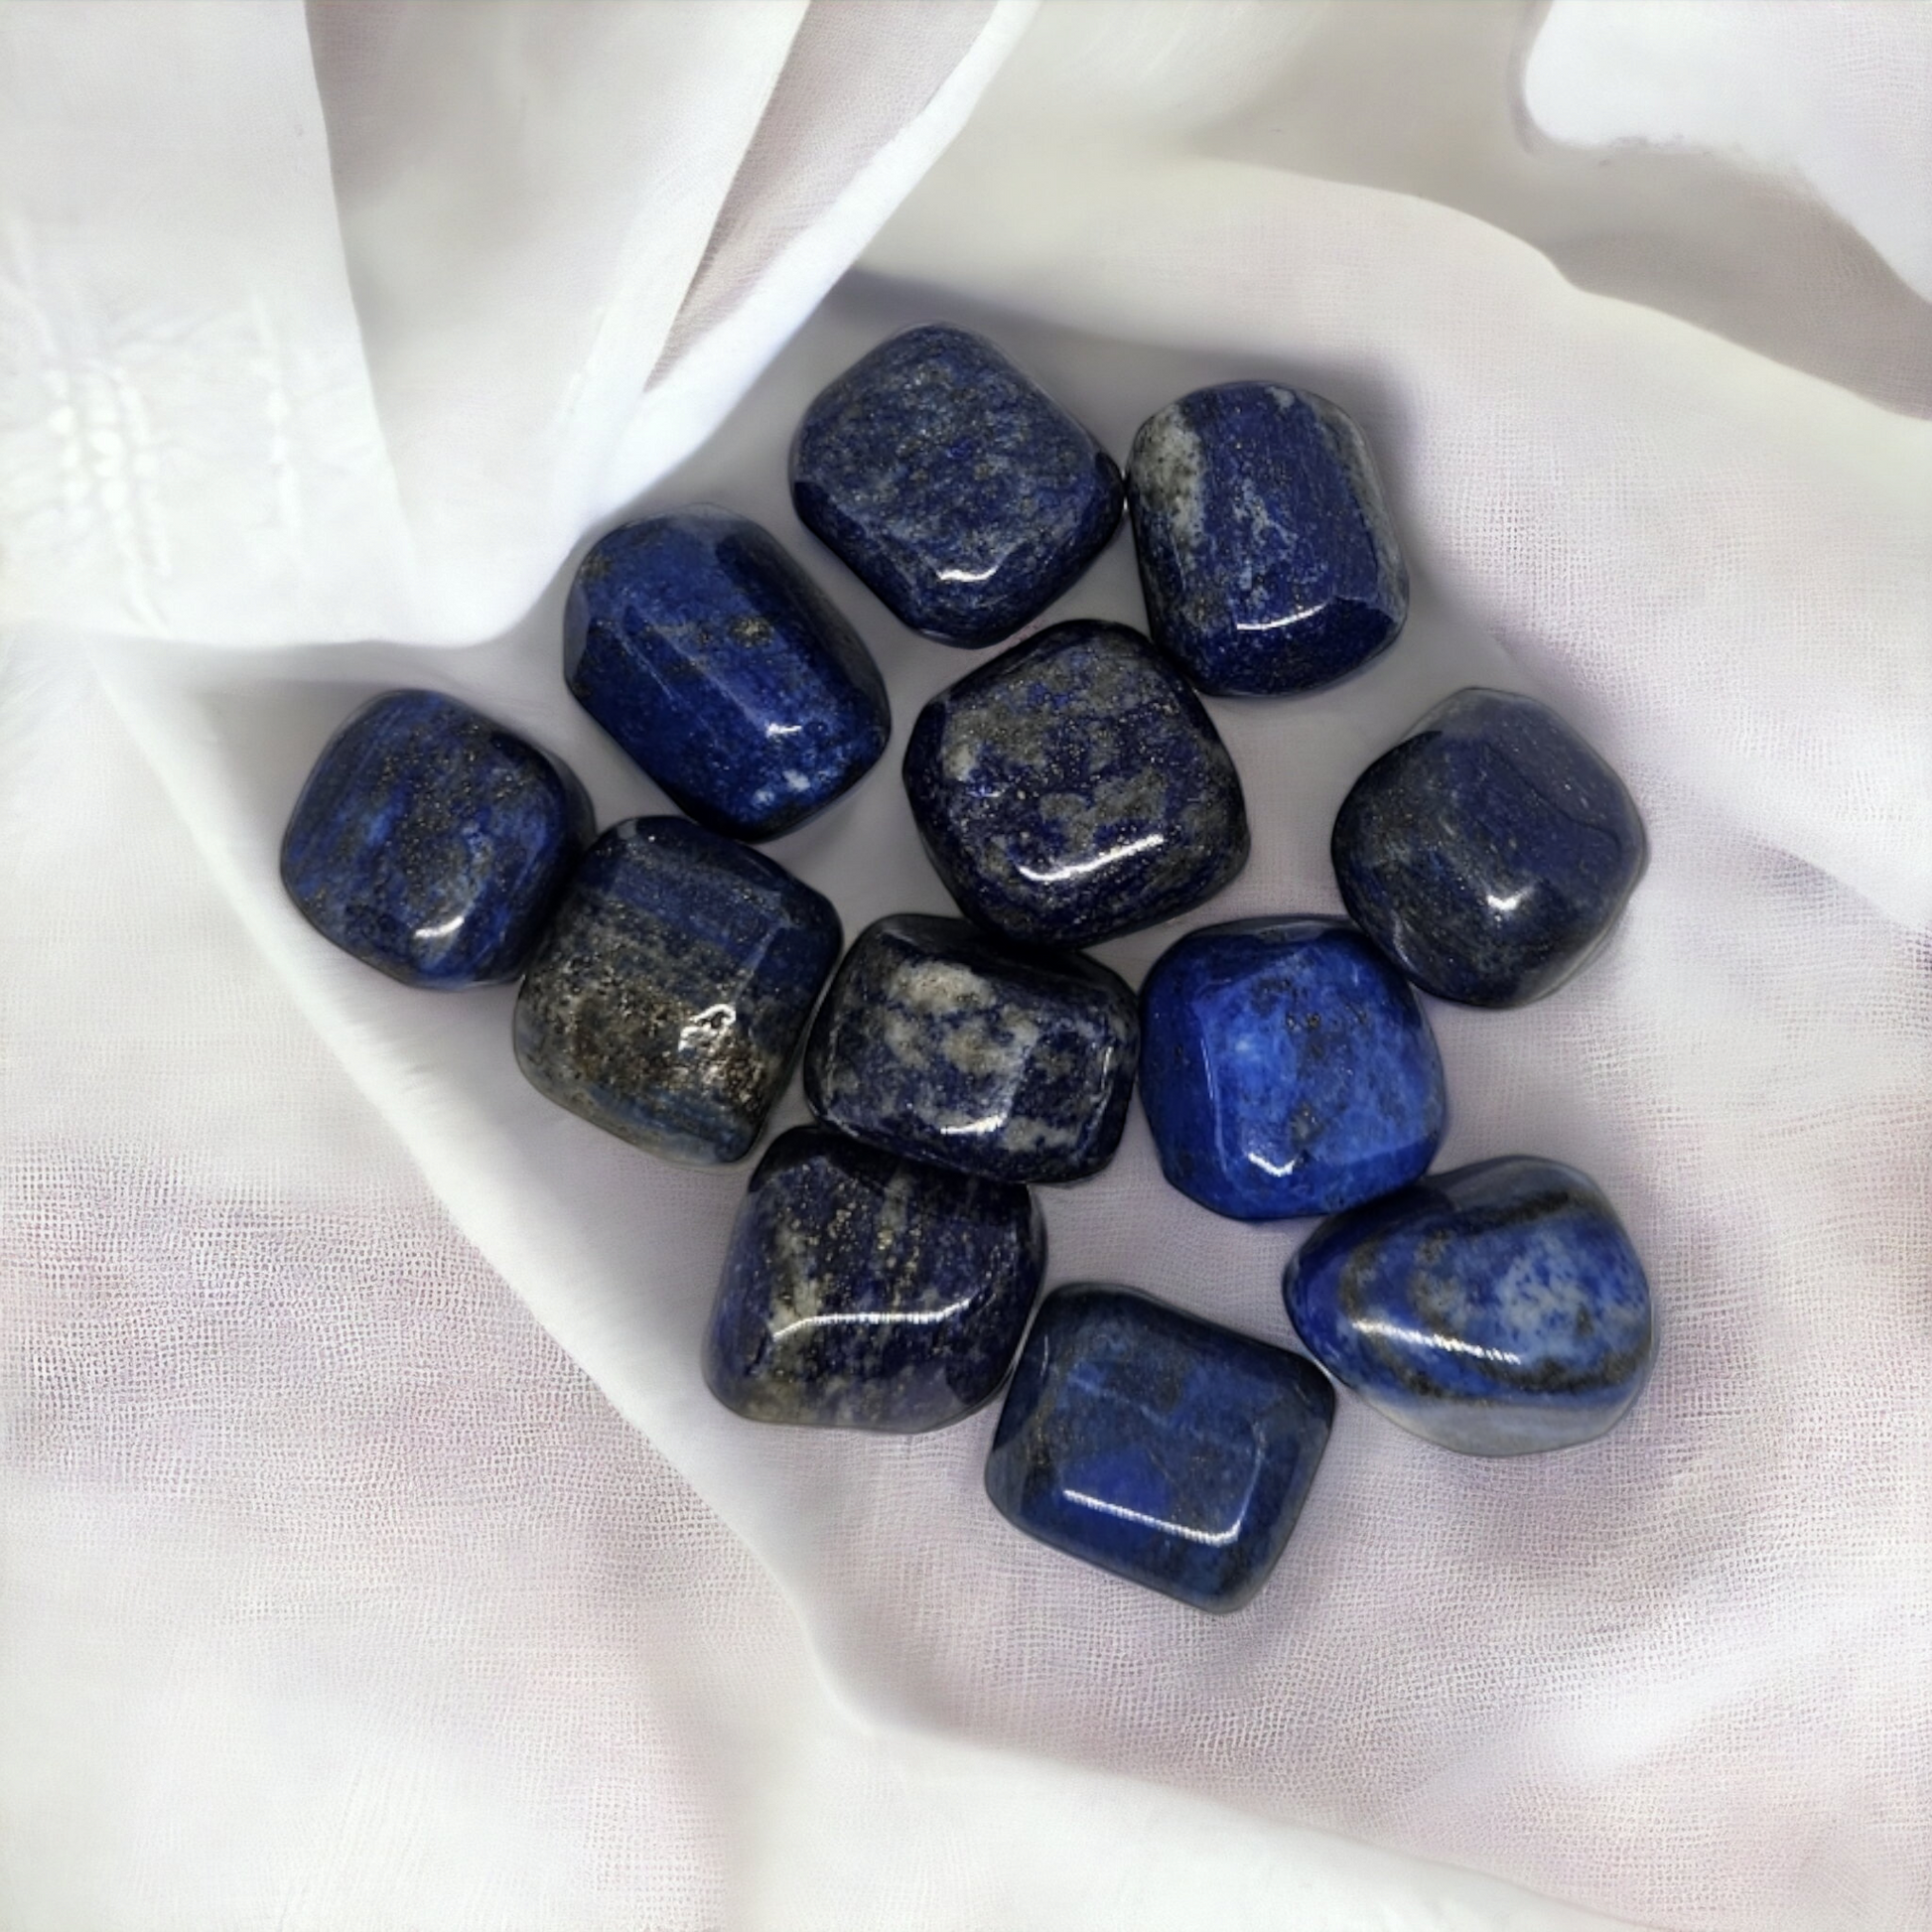 Lapis lazuli tumble stones. Blue crystals at crystal shop near sydney.